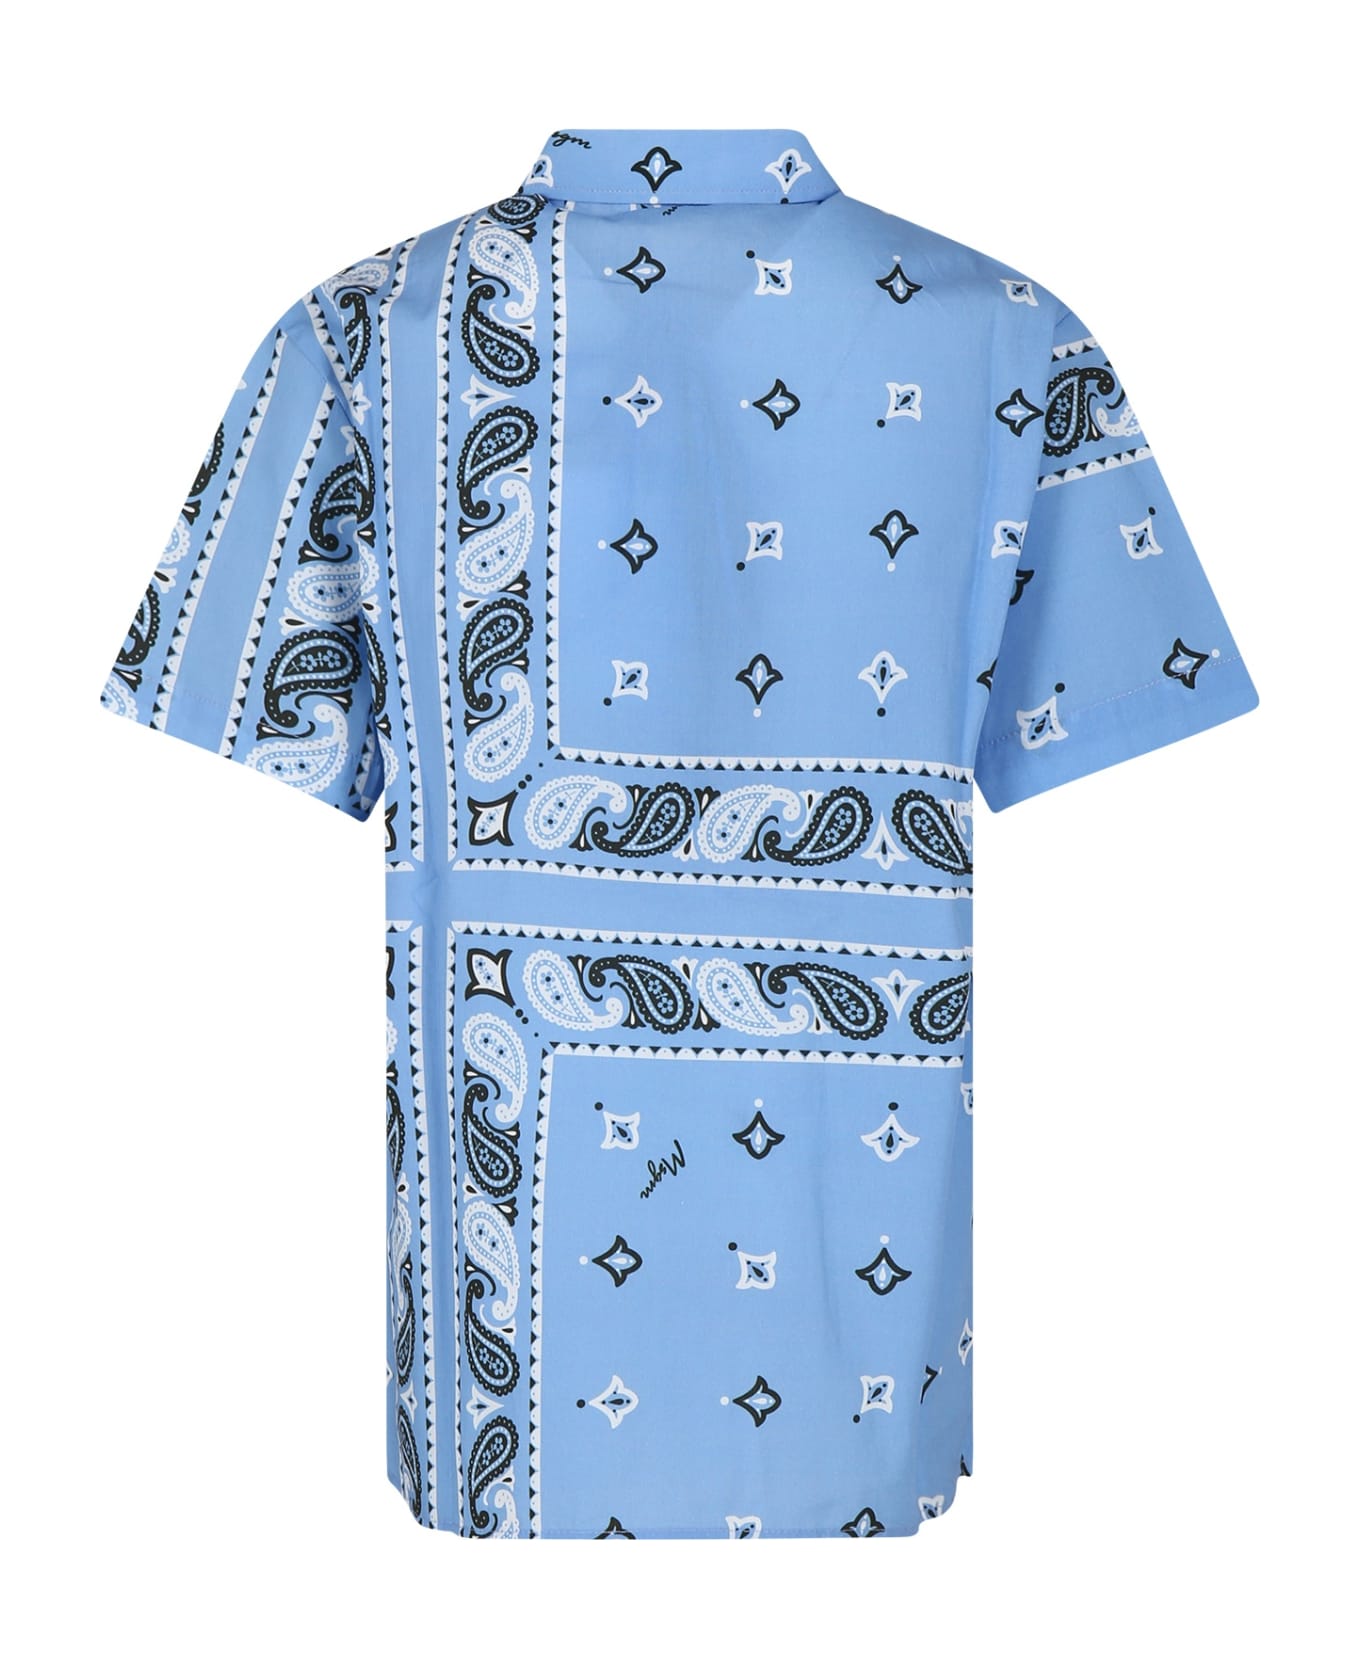 MSGM Light Blue Shirt For Boy With Paisley Print - Light Blue シャツ